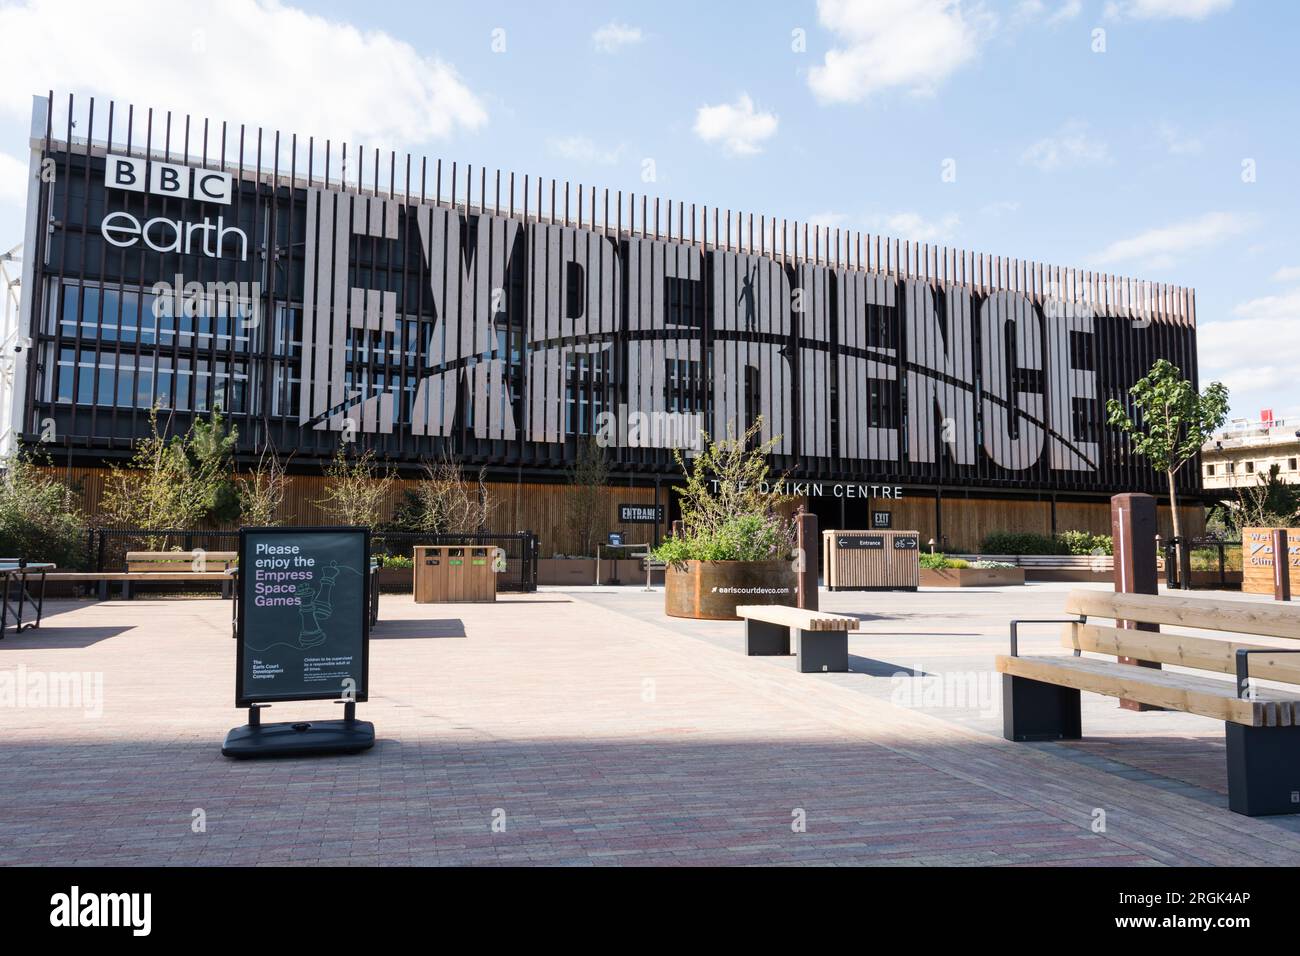 David Attenborough's BBC Earth Experience, The Daikin Centre, Empress Place, London, SW6, England, U.K. Stock Photo